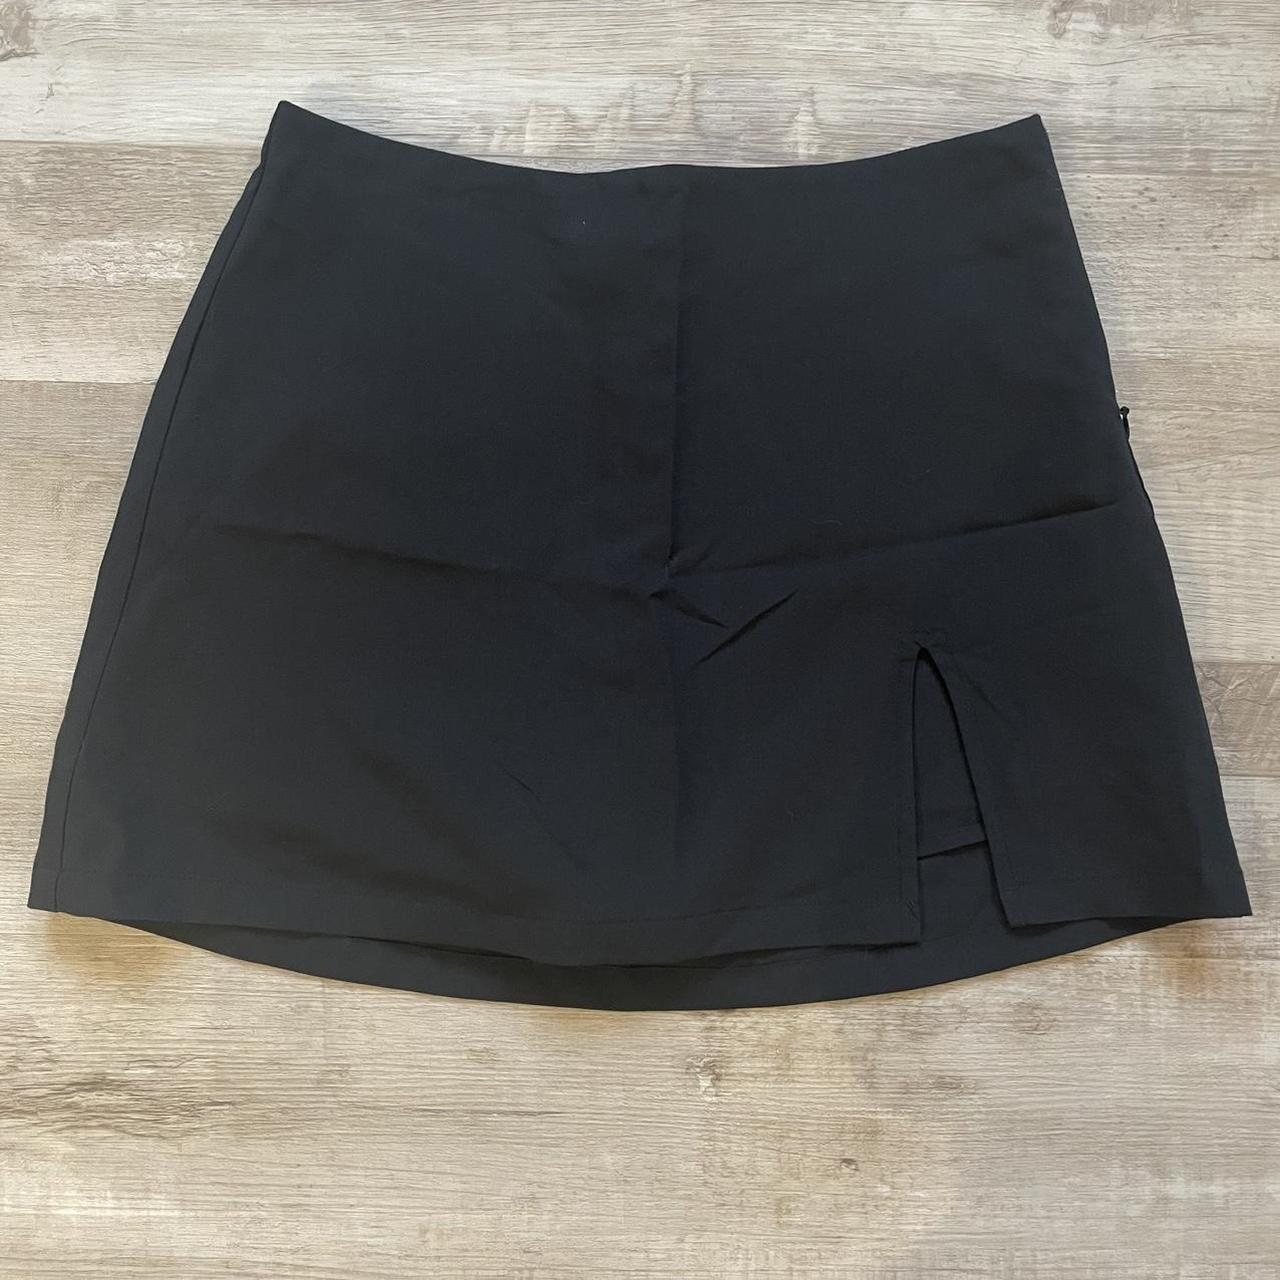 Black Mini Skirt Shorts underneath to prevent riding... - Depop